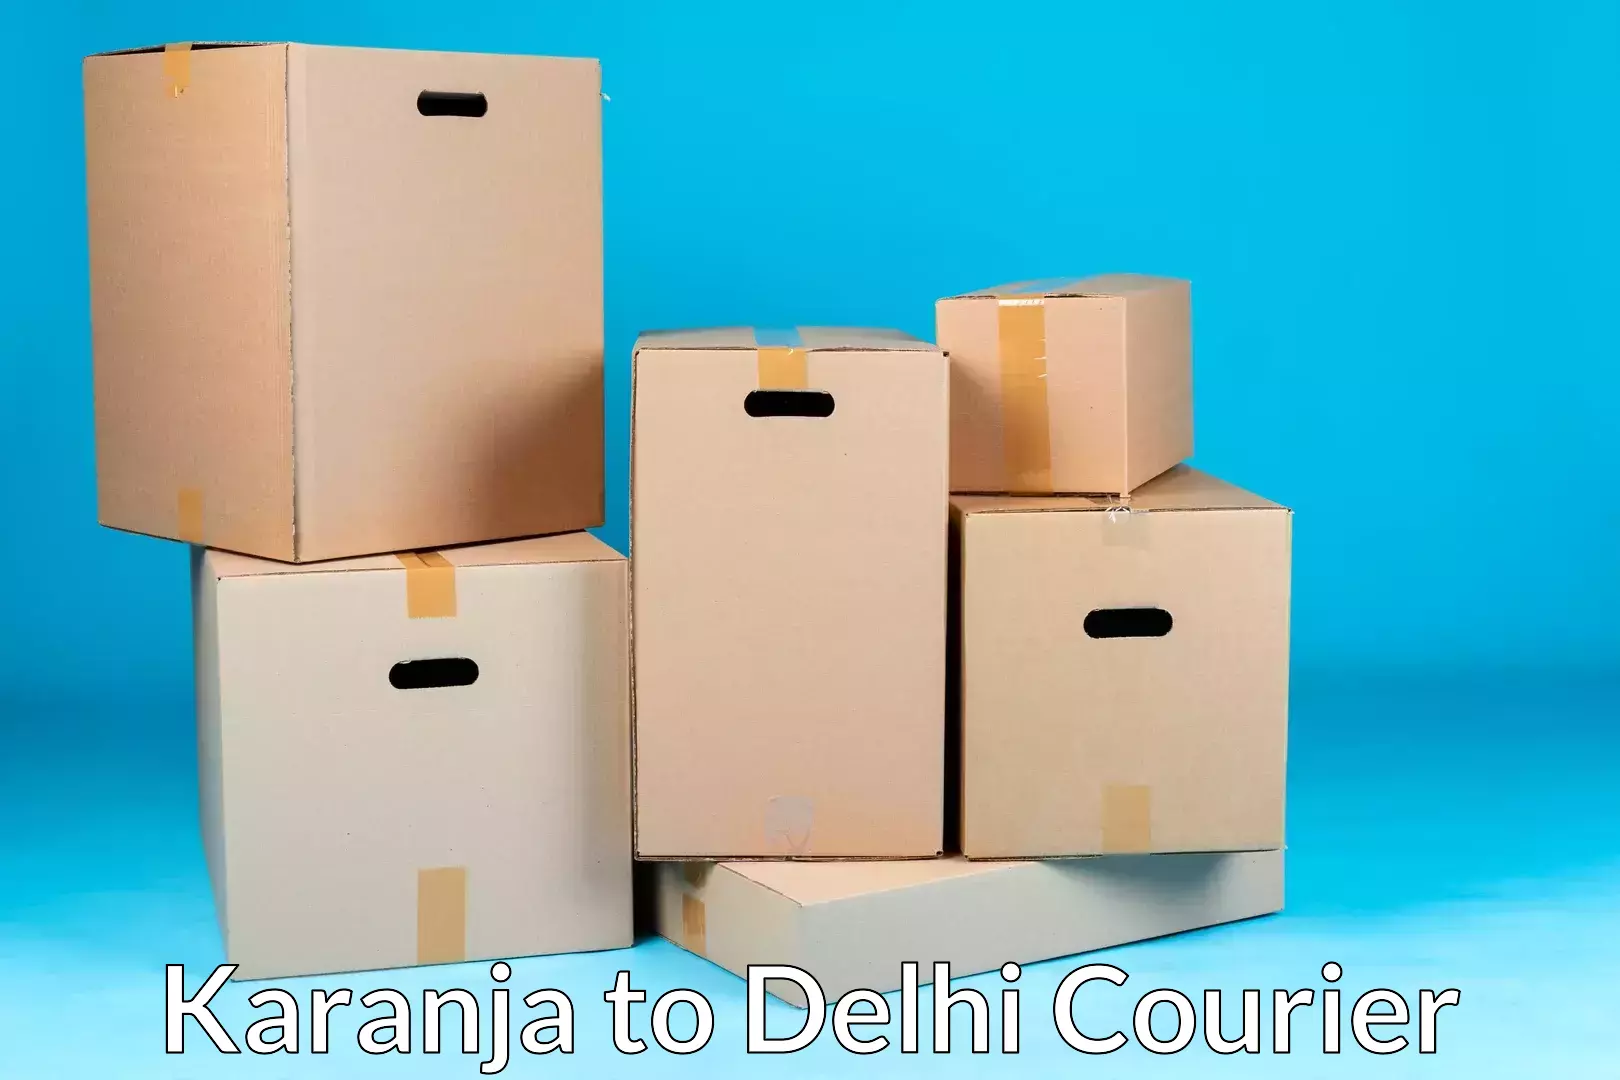 Seamless moving process Karanja to Delhi